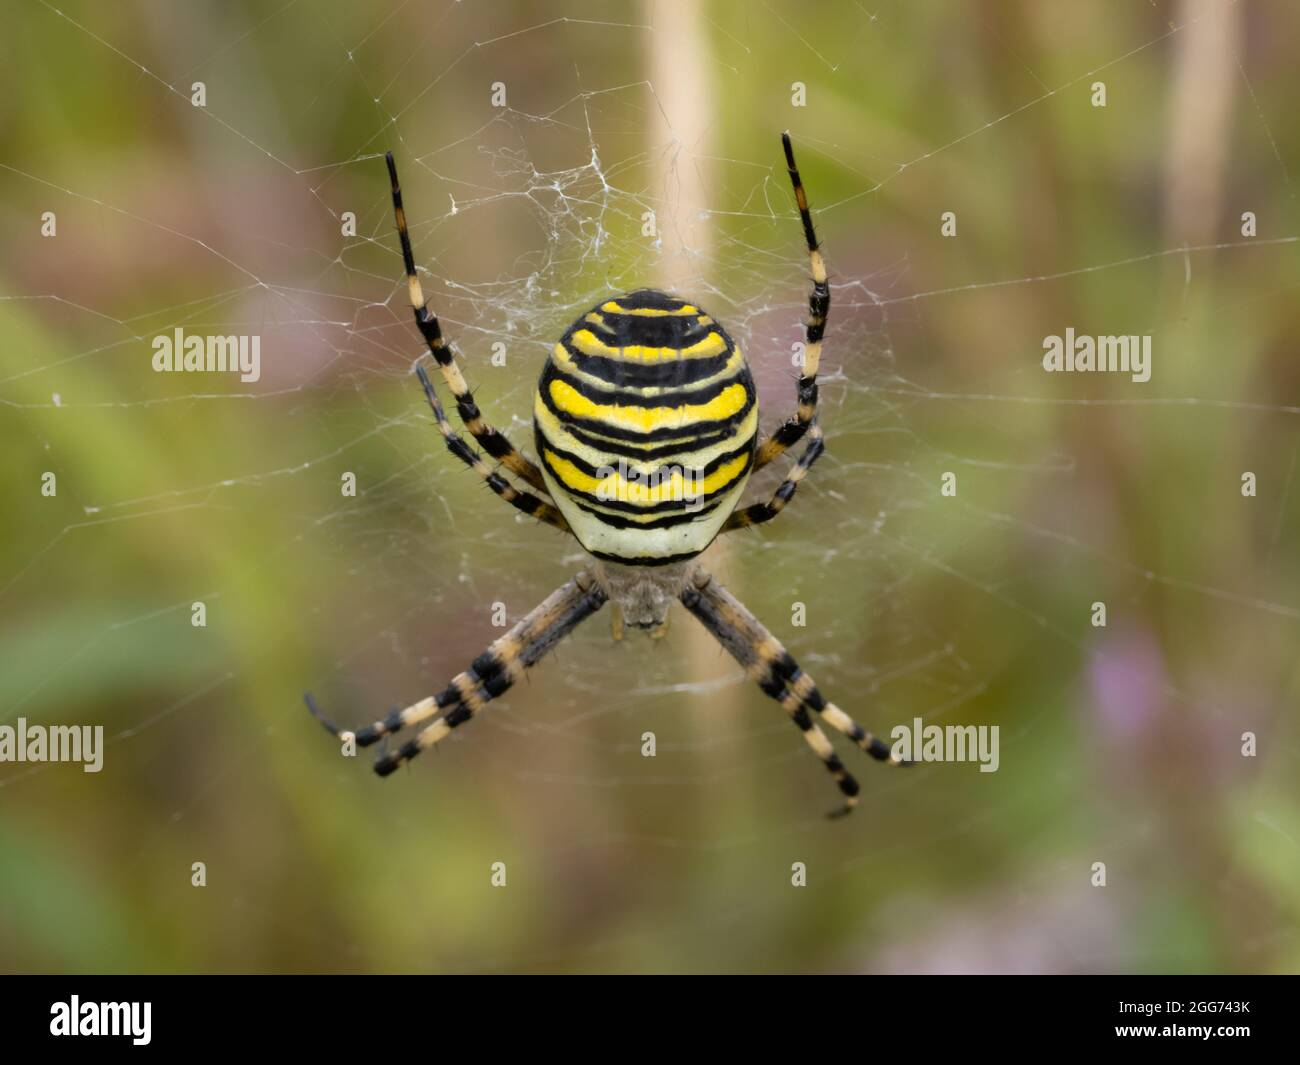 Argiope bruennichi a Wasp Spider in its web. Stock Photo